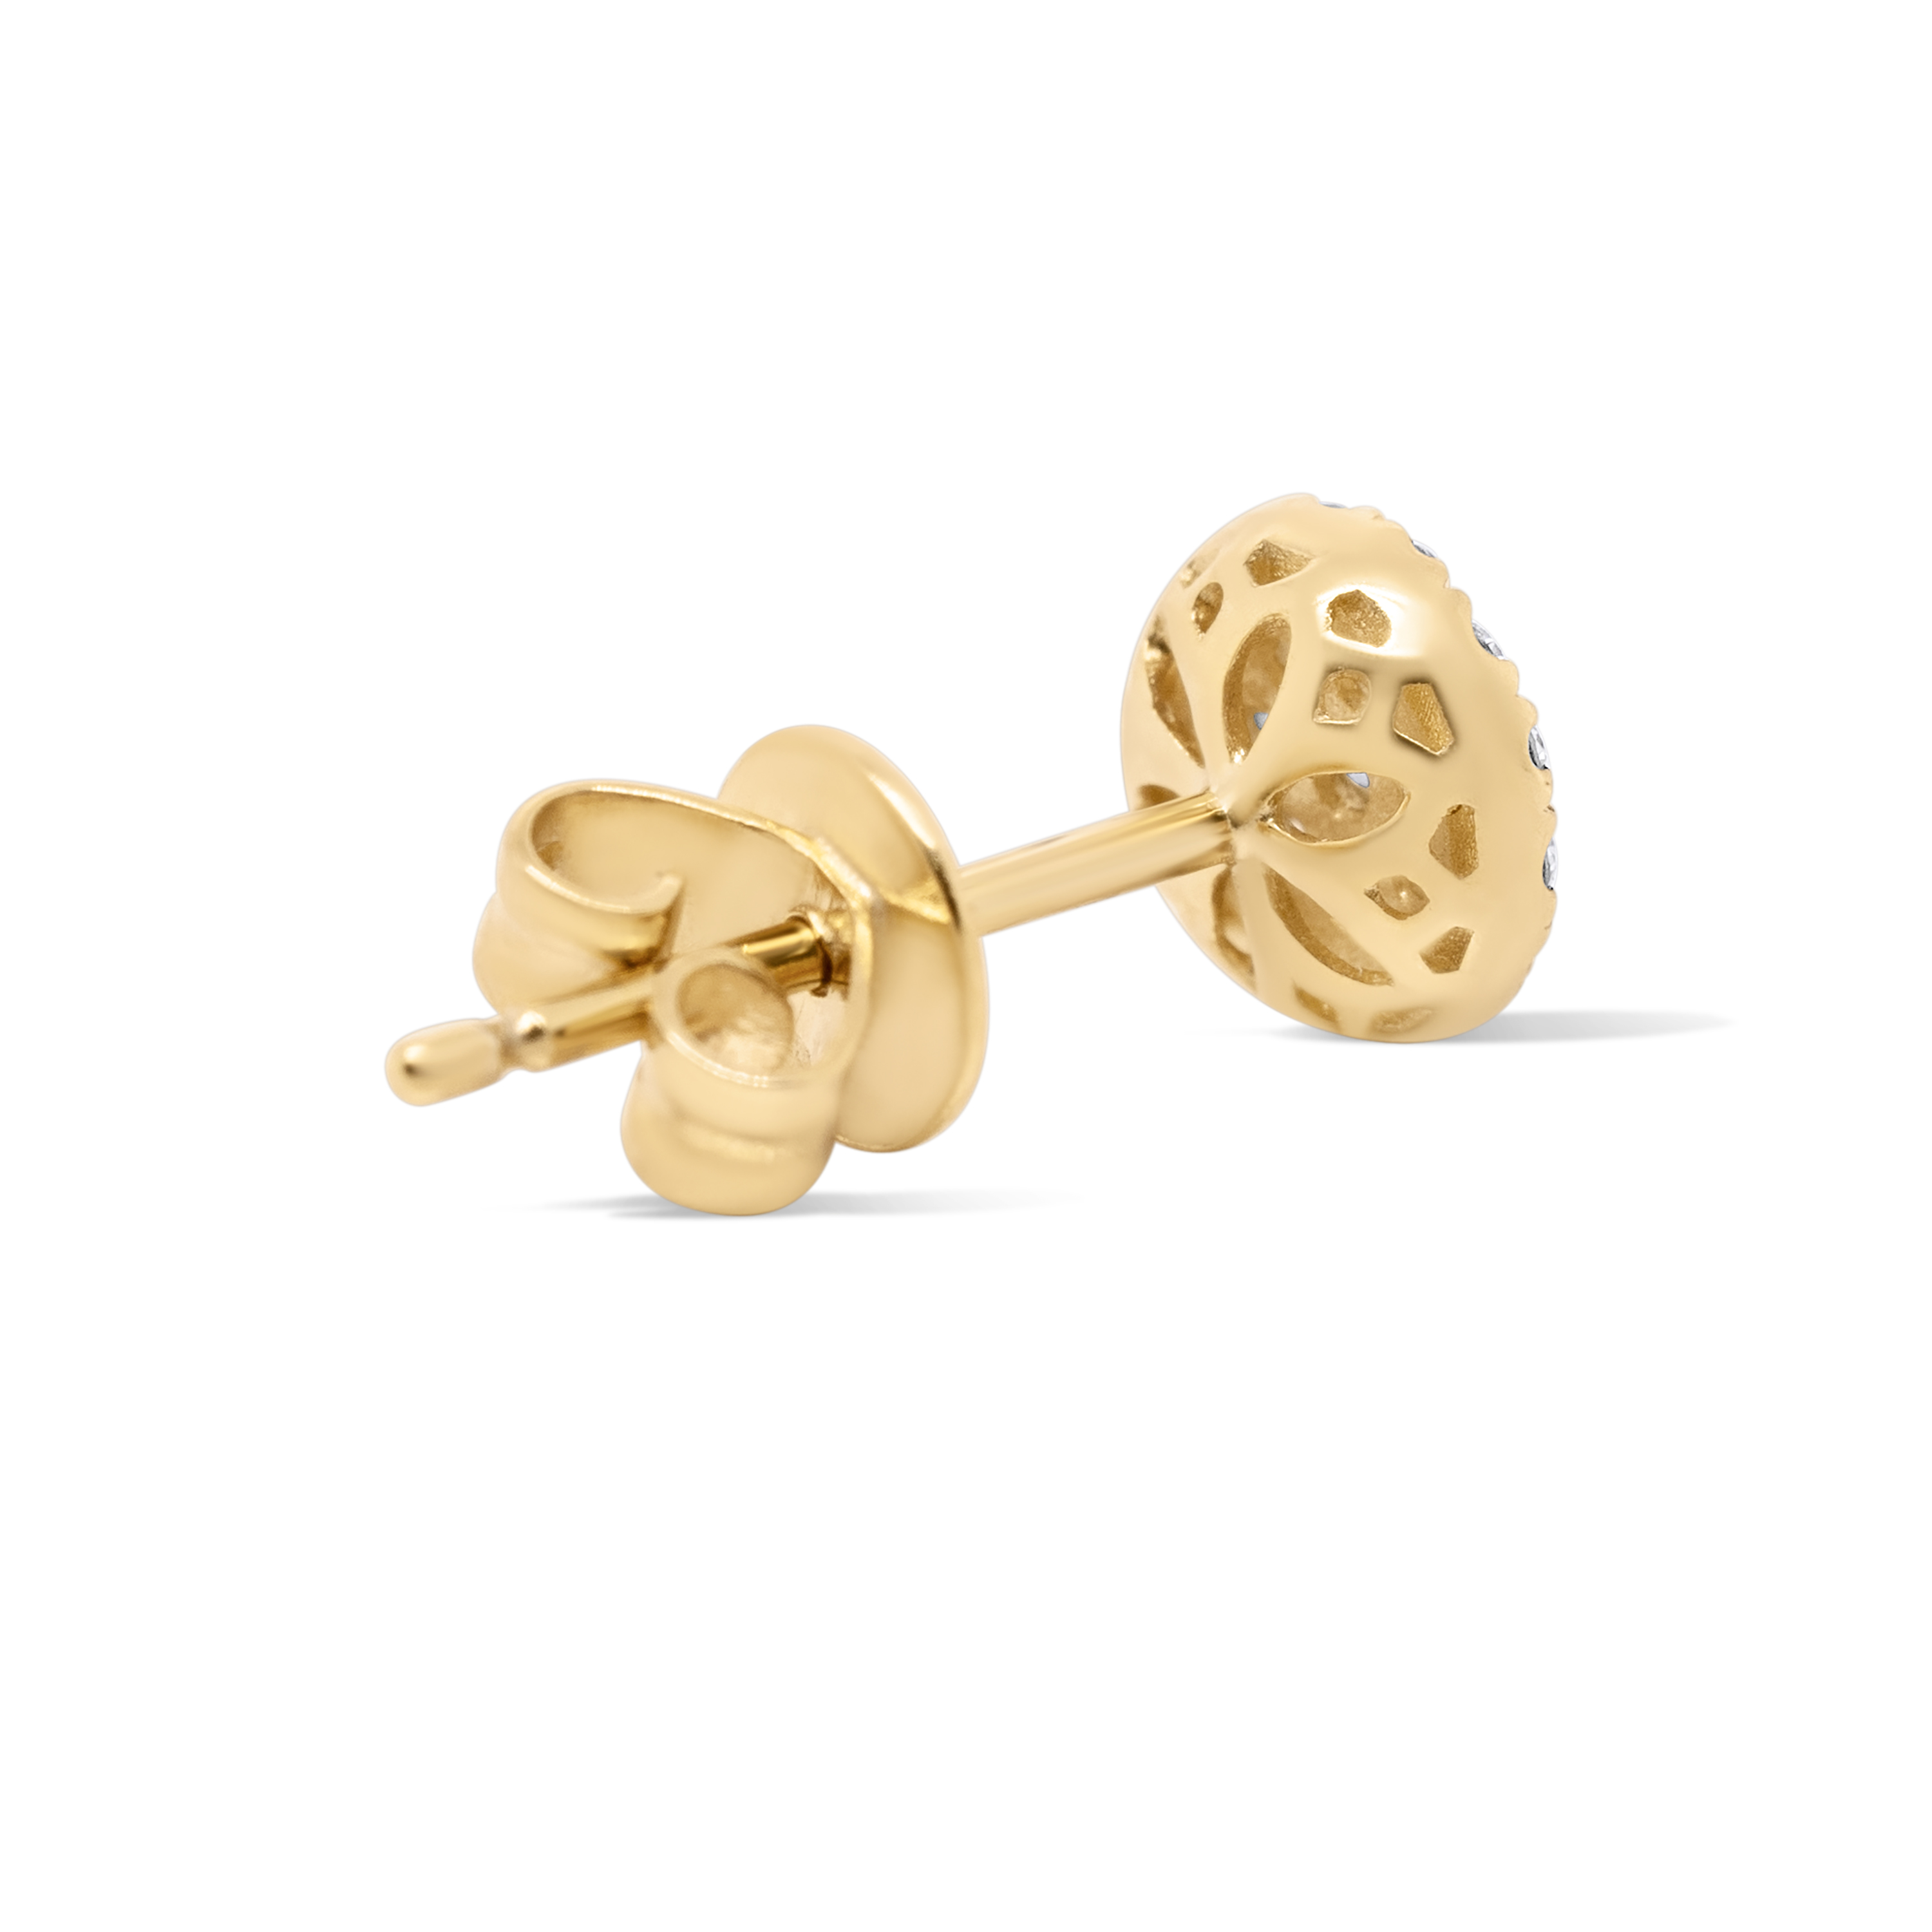 Diamond Earrings 0.21 ct. 10K Yellow Gold